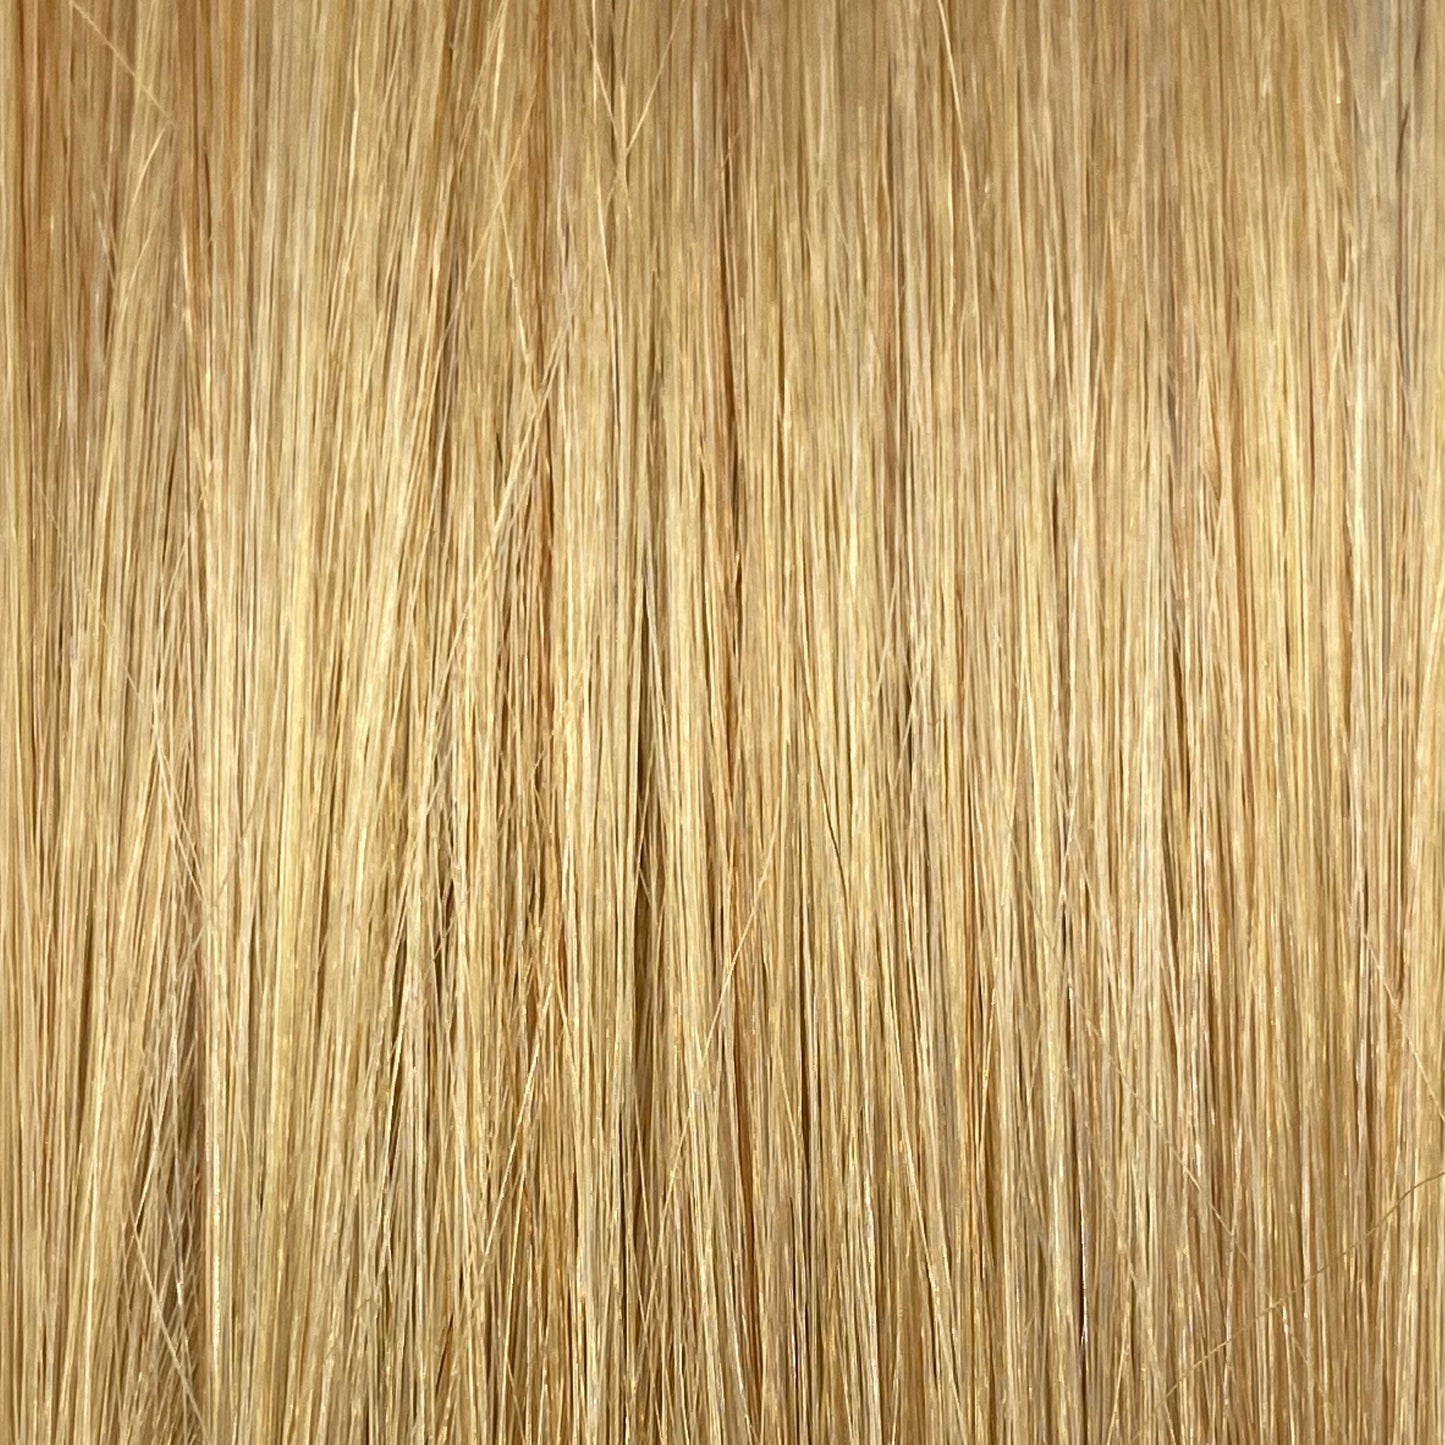 Fusion hair extensions #24 - 40cm/16 inches - Ash Blonde Fusion Euro So Cap 